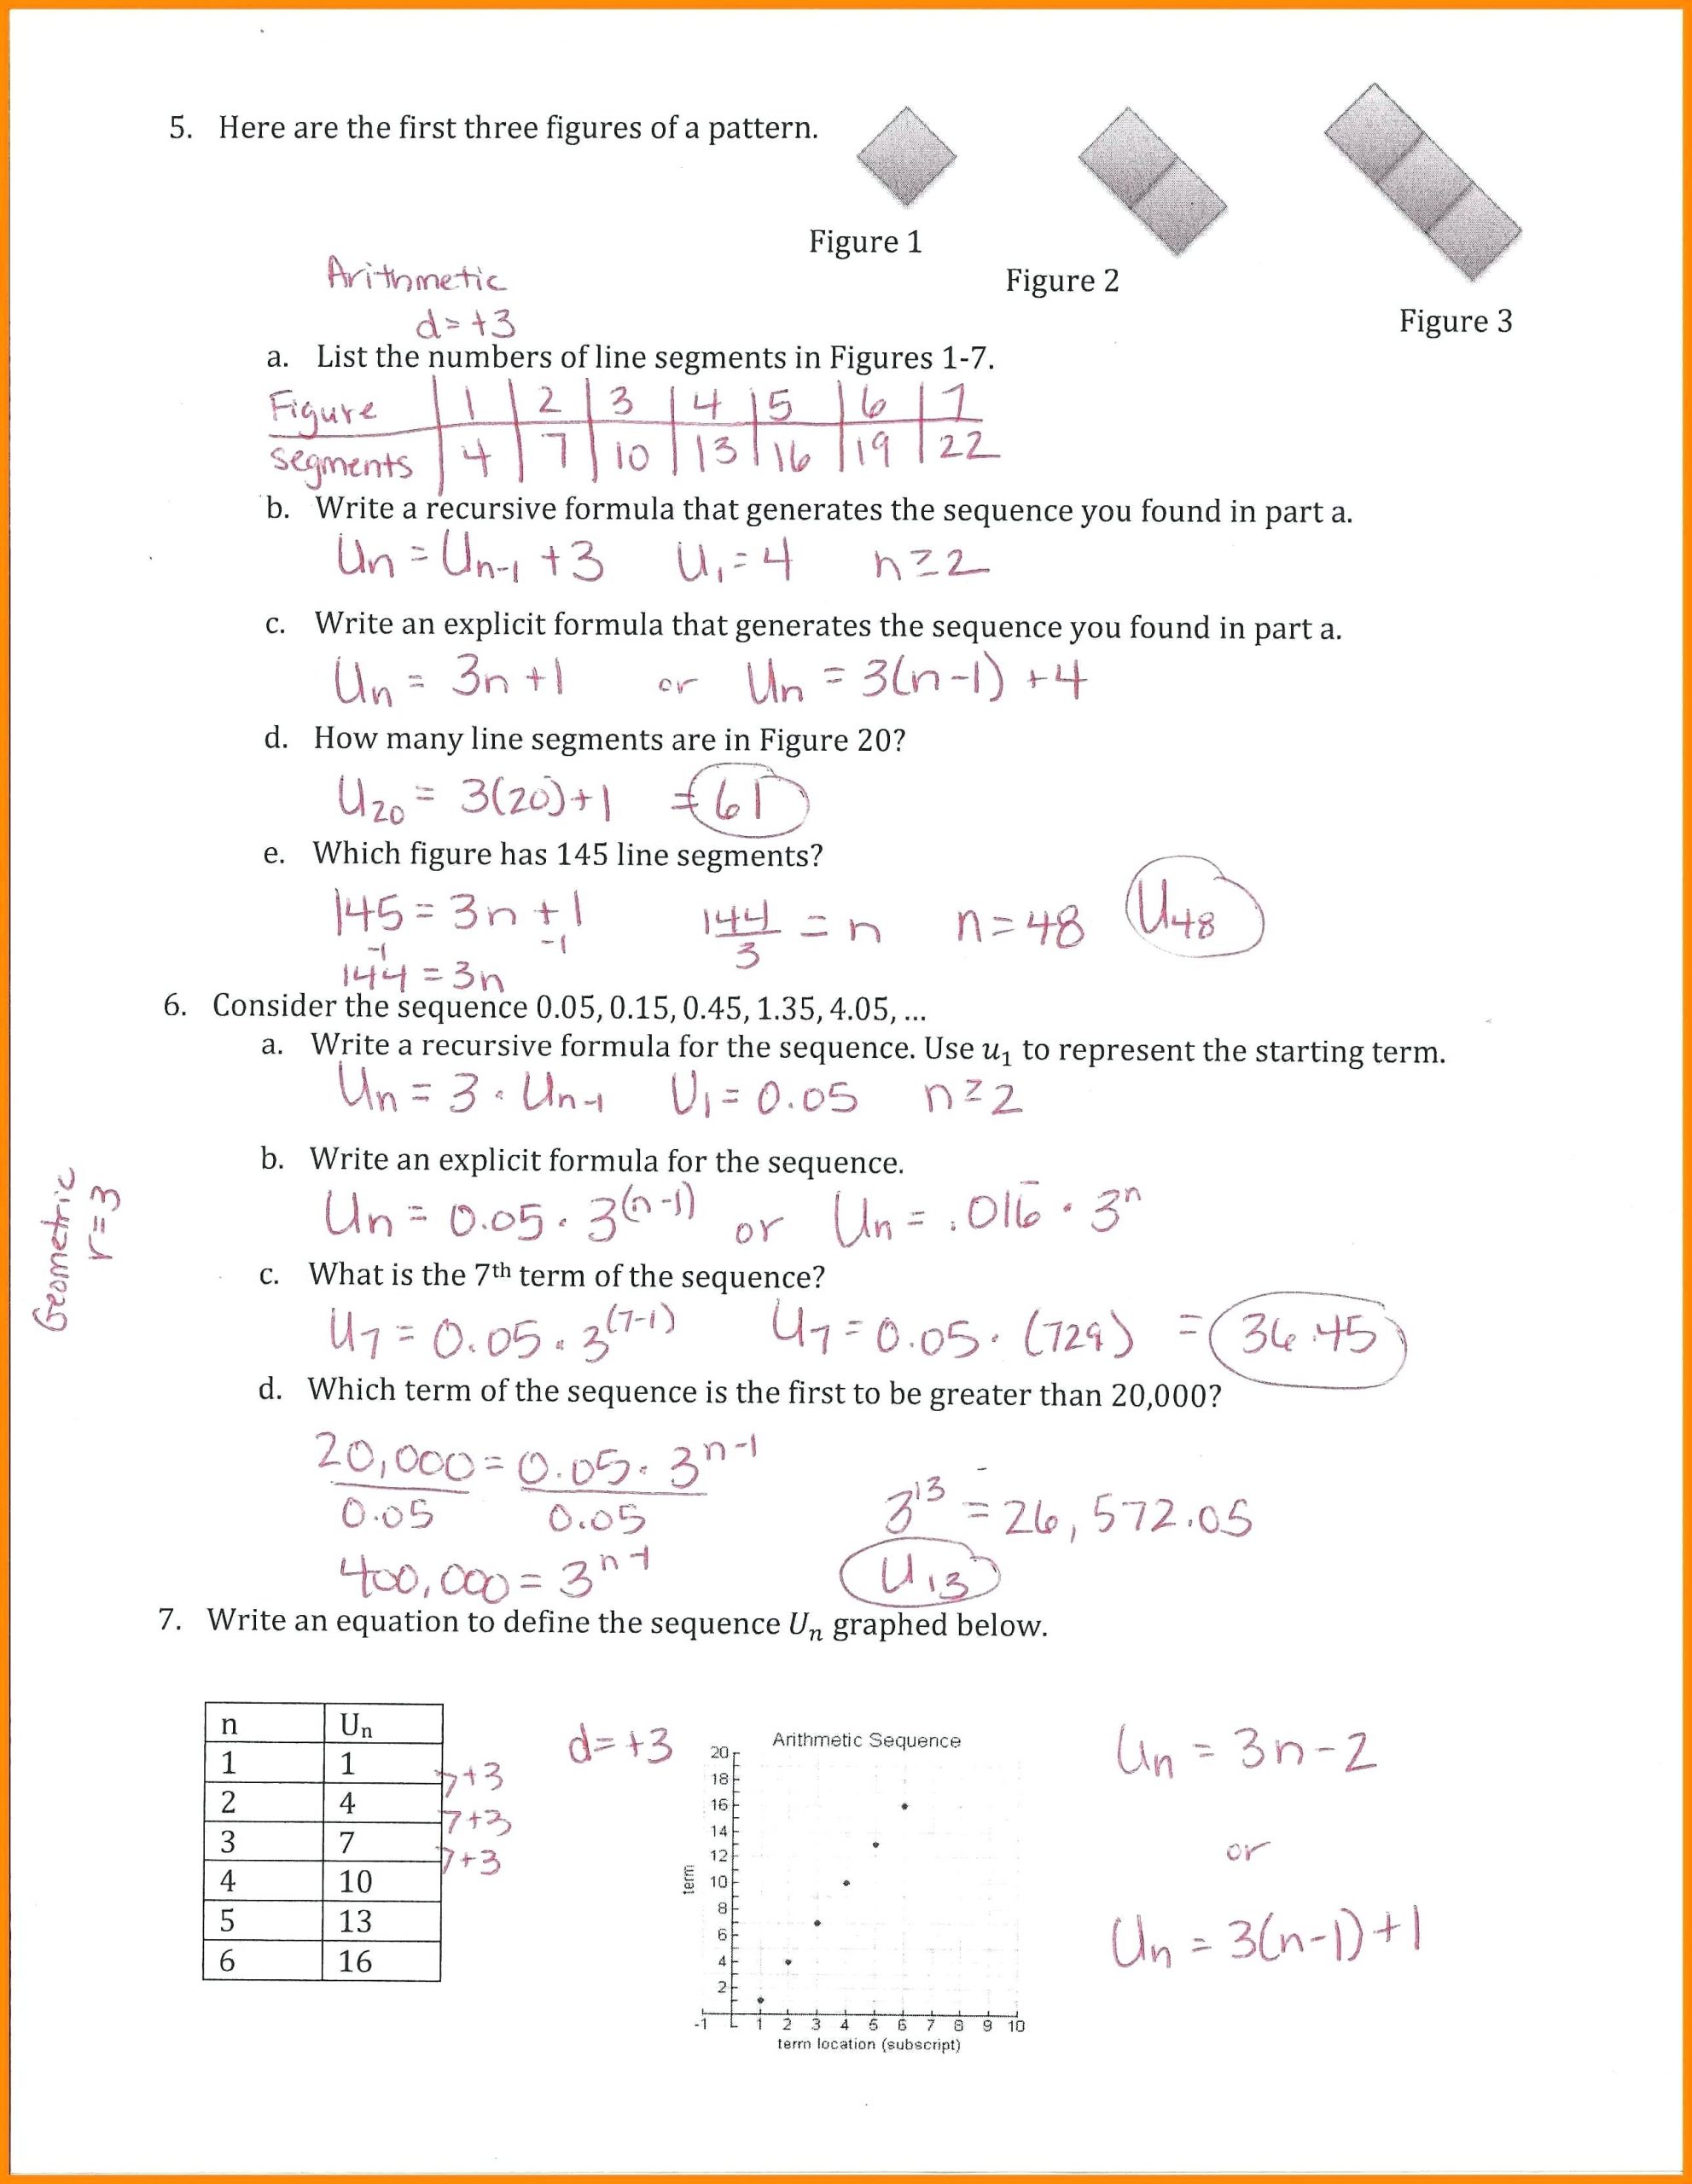 Arithmetic Sequence Worksheet Algebra 1 Geometric and Arithmetic Sequence Worksheet Nidecmege